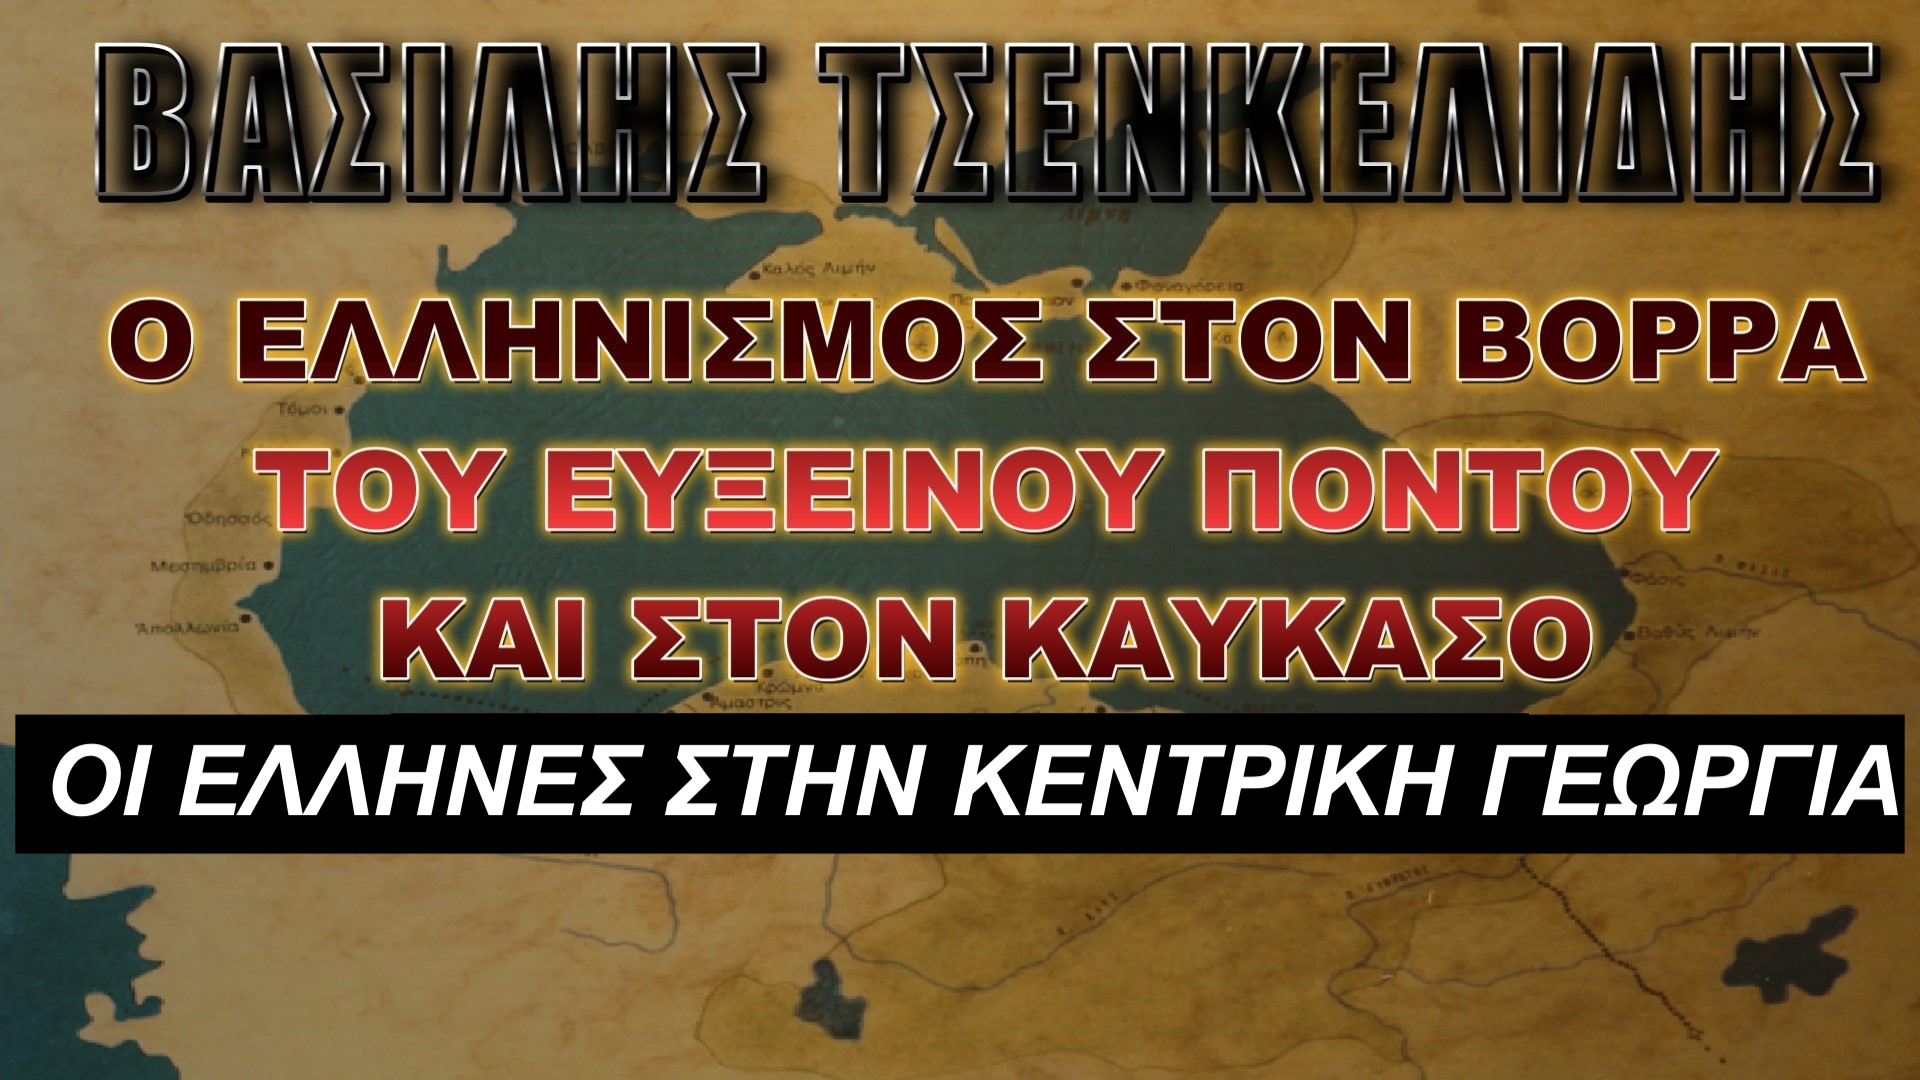 O Ελληνισμός στον Βορρά του Εύξεινου Πόντου και τον Καύκασο (Θ’ ΜΕΡΟΣ)